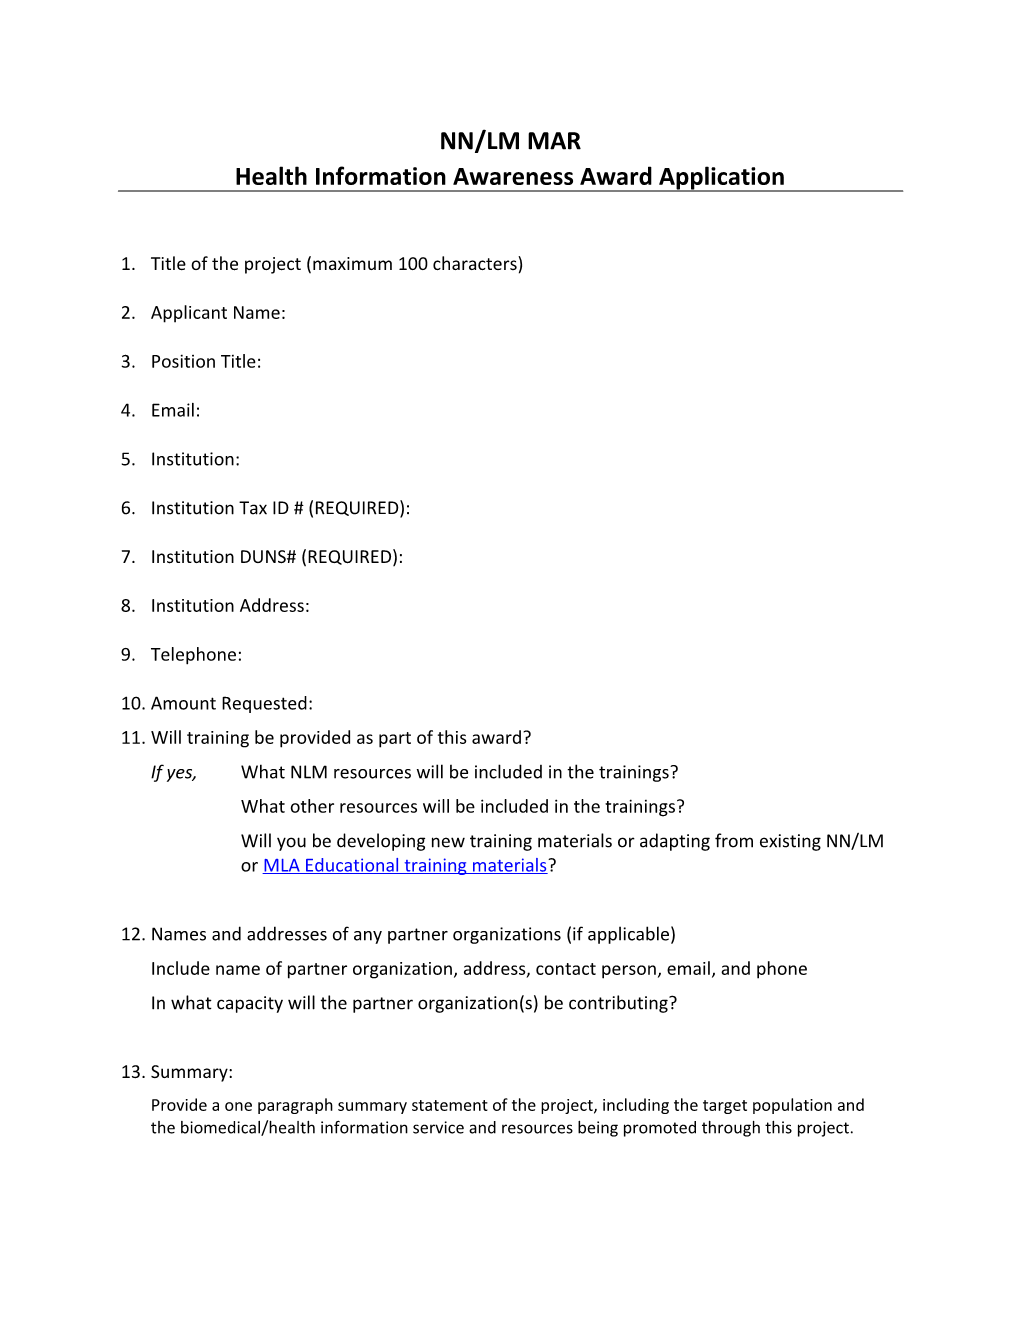 Health Information Awareness Award Application